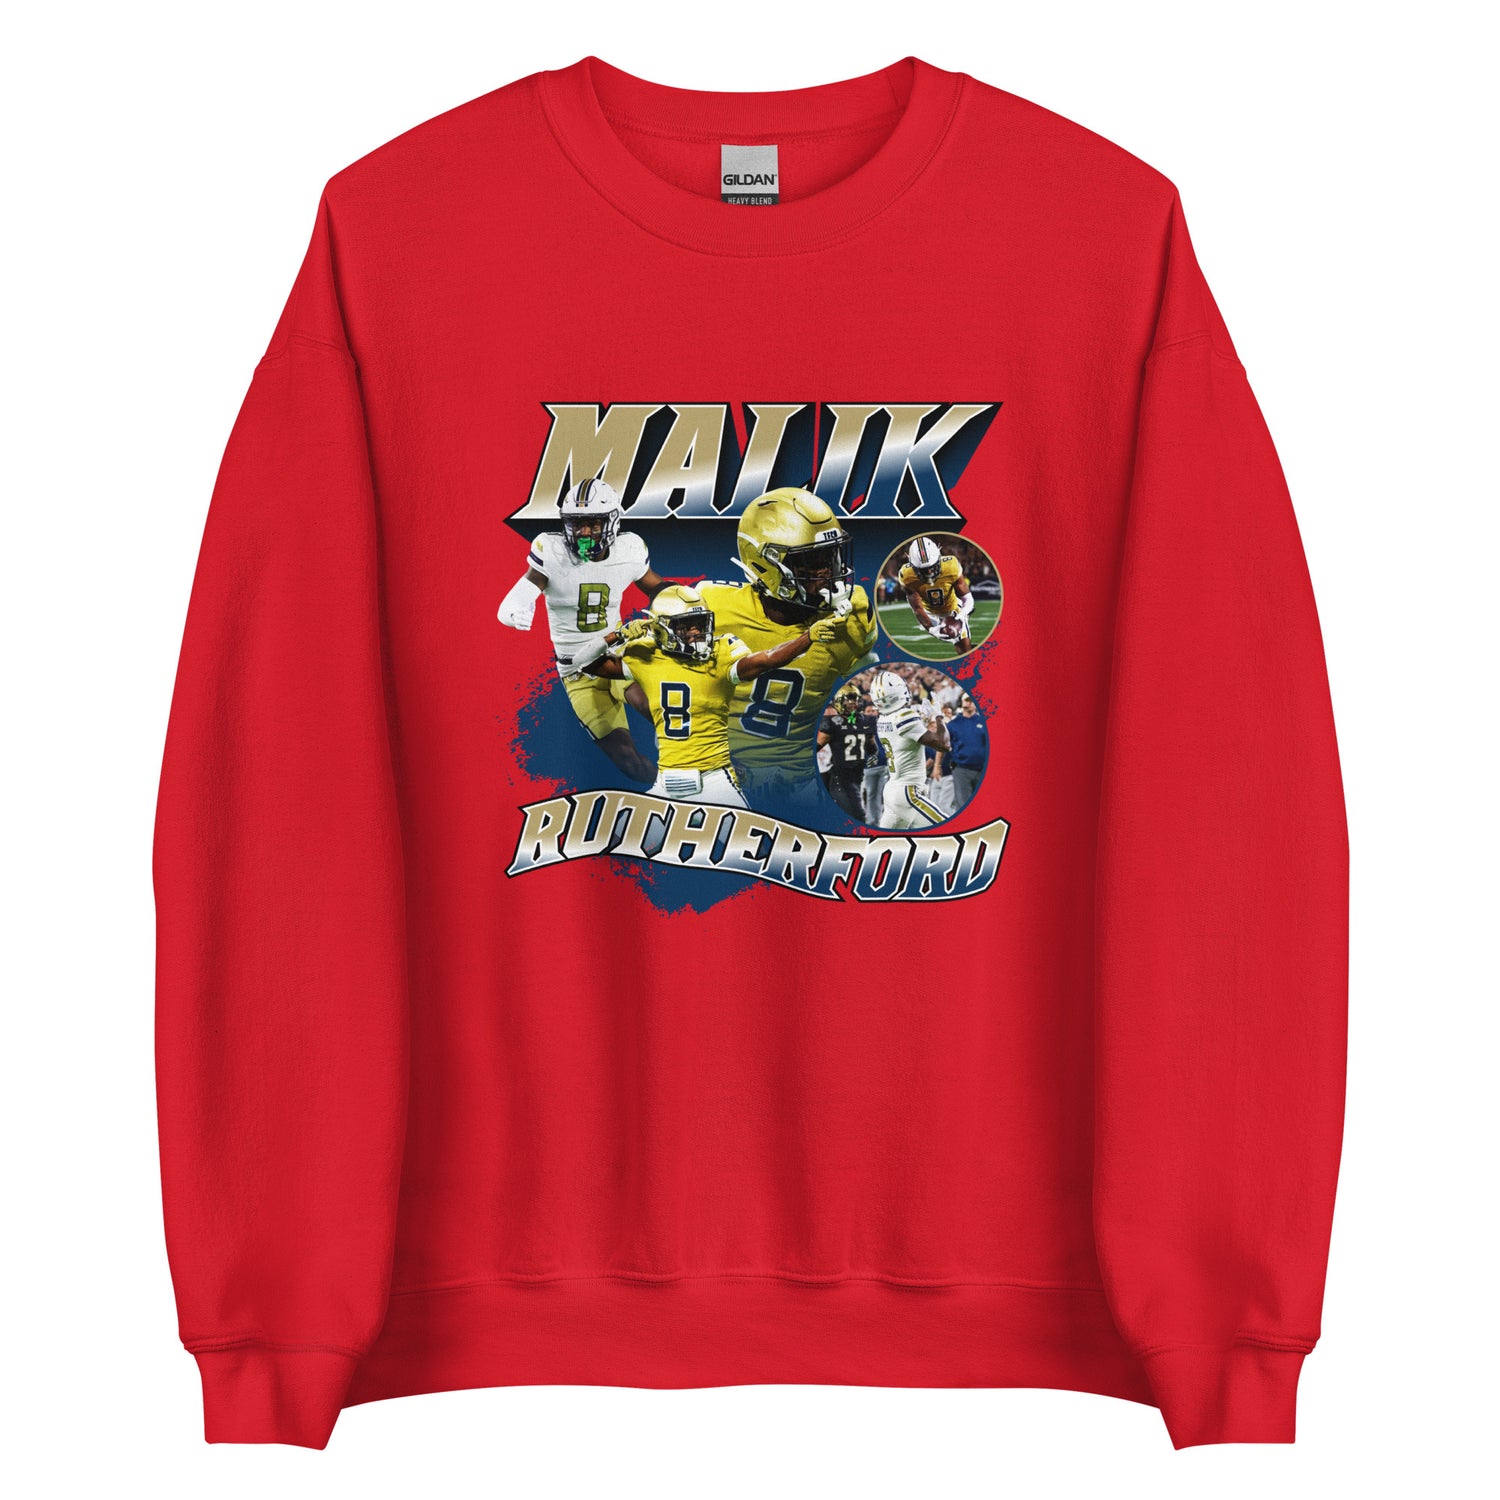 Malik Rutherford "Vintage" Sweatshirt - Fan Arch